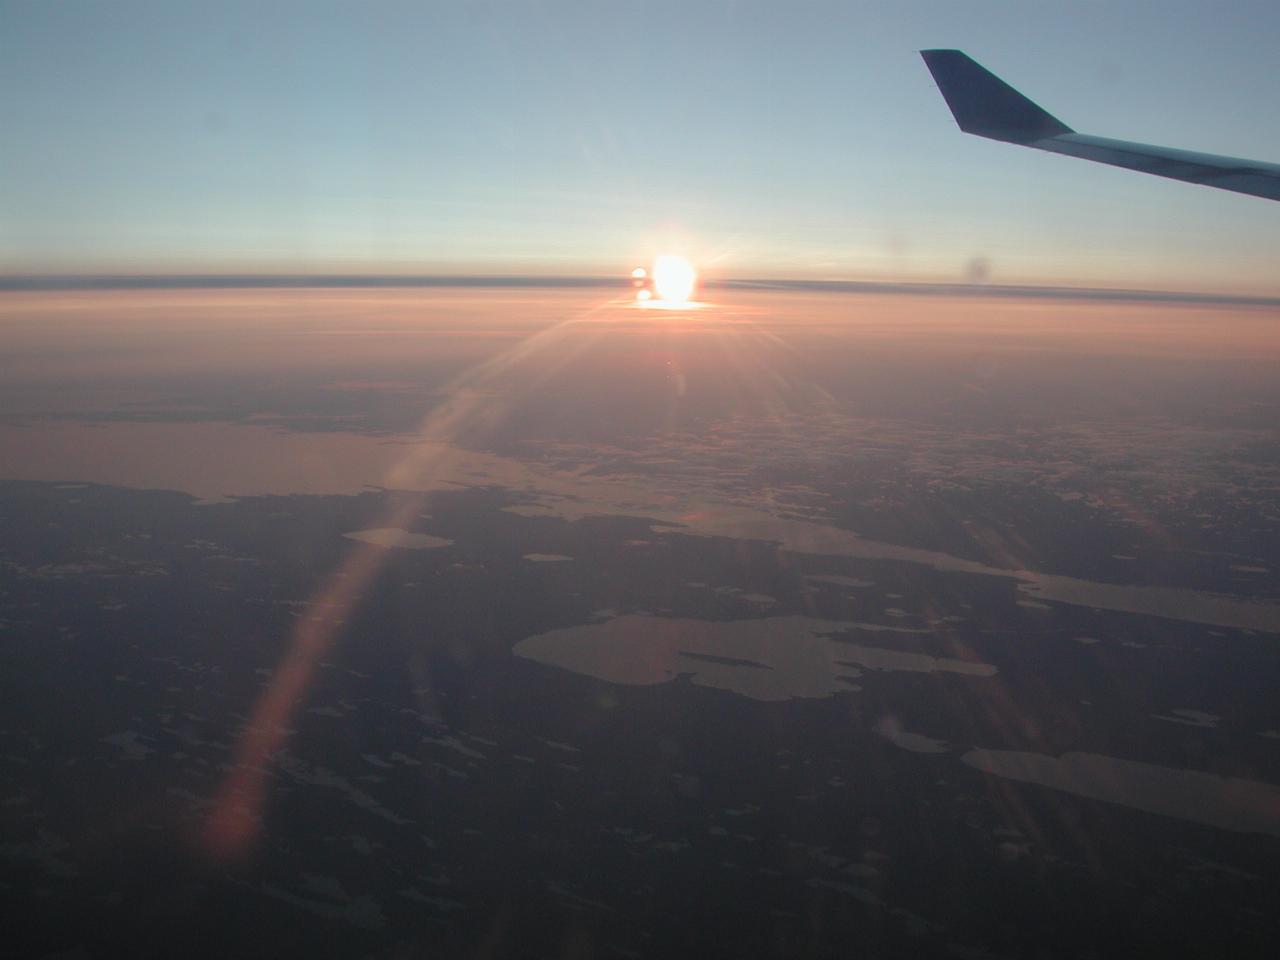 KPLU Viking Jazz: Sunset over northern Canada on way to Copenhagen